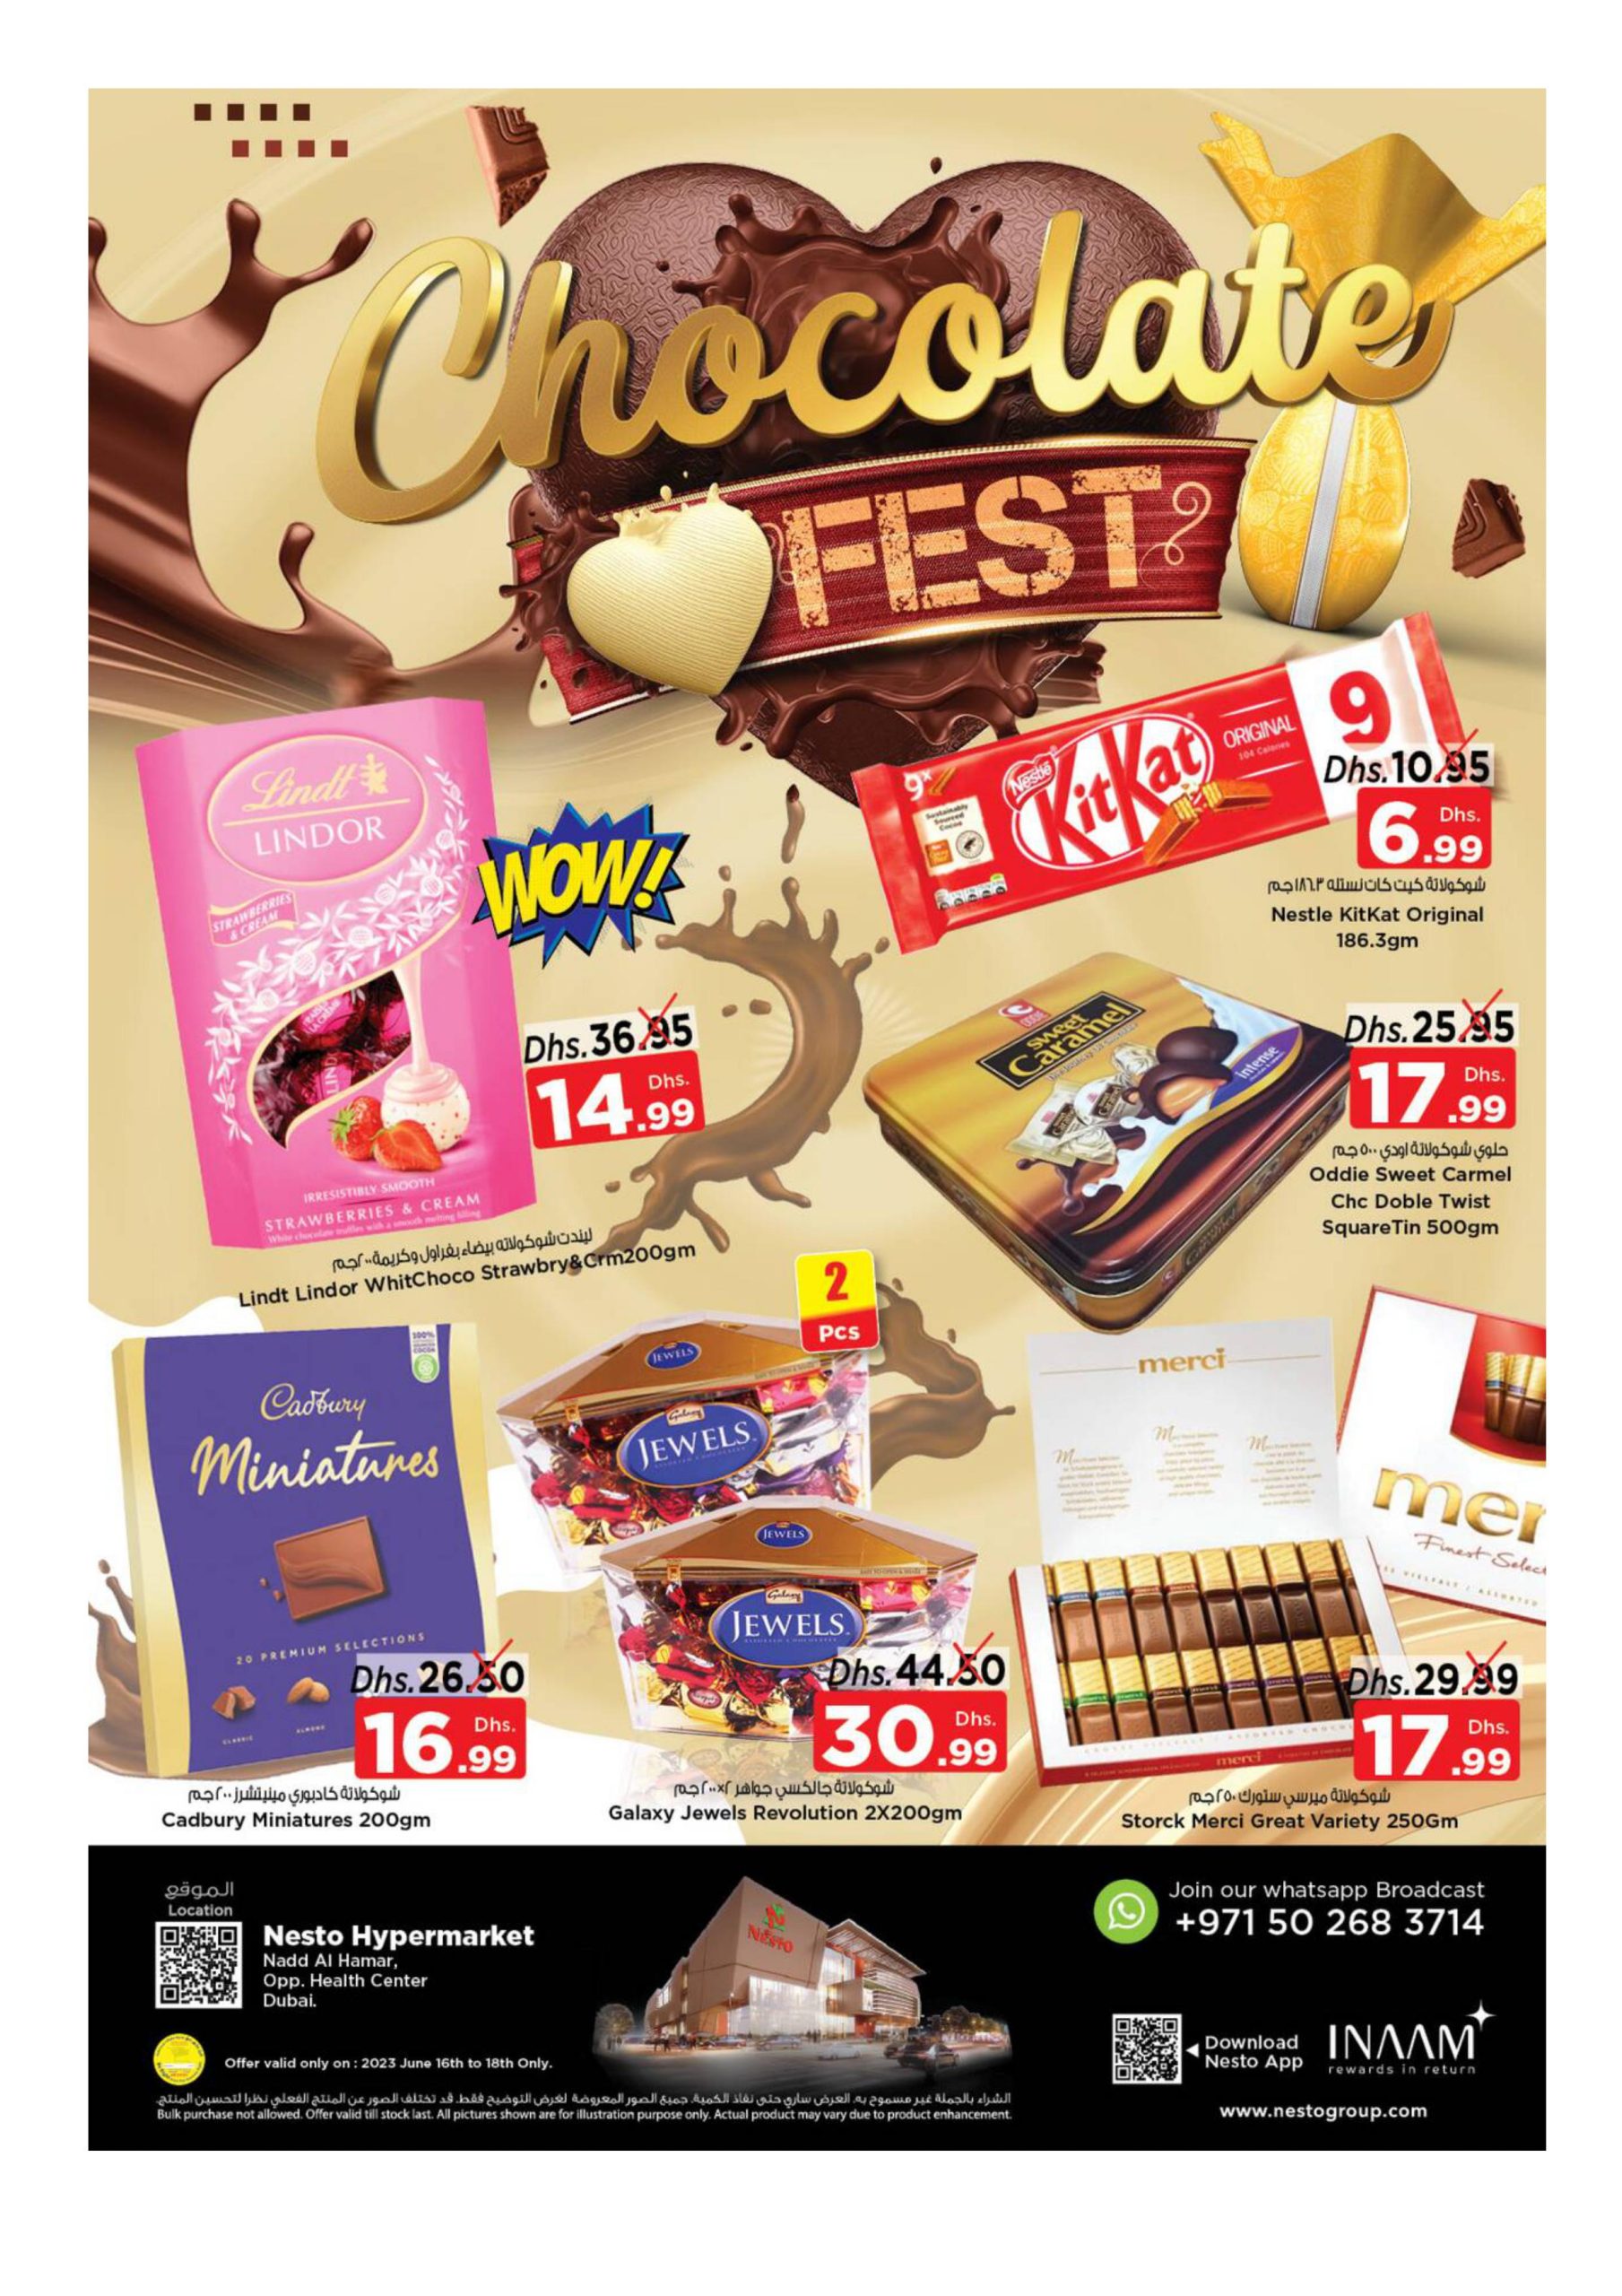 Nesto Chocolate Fest Offers